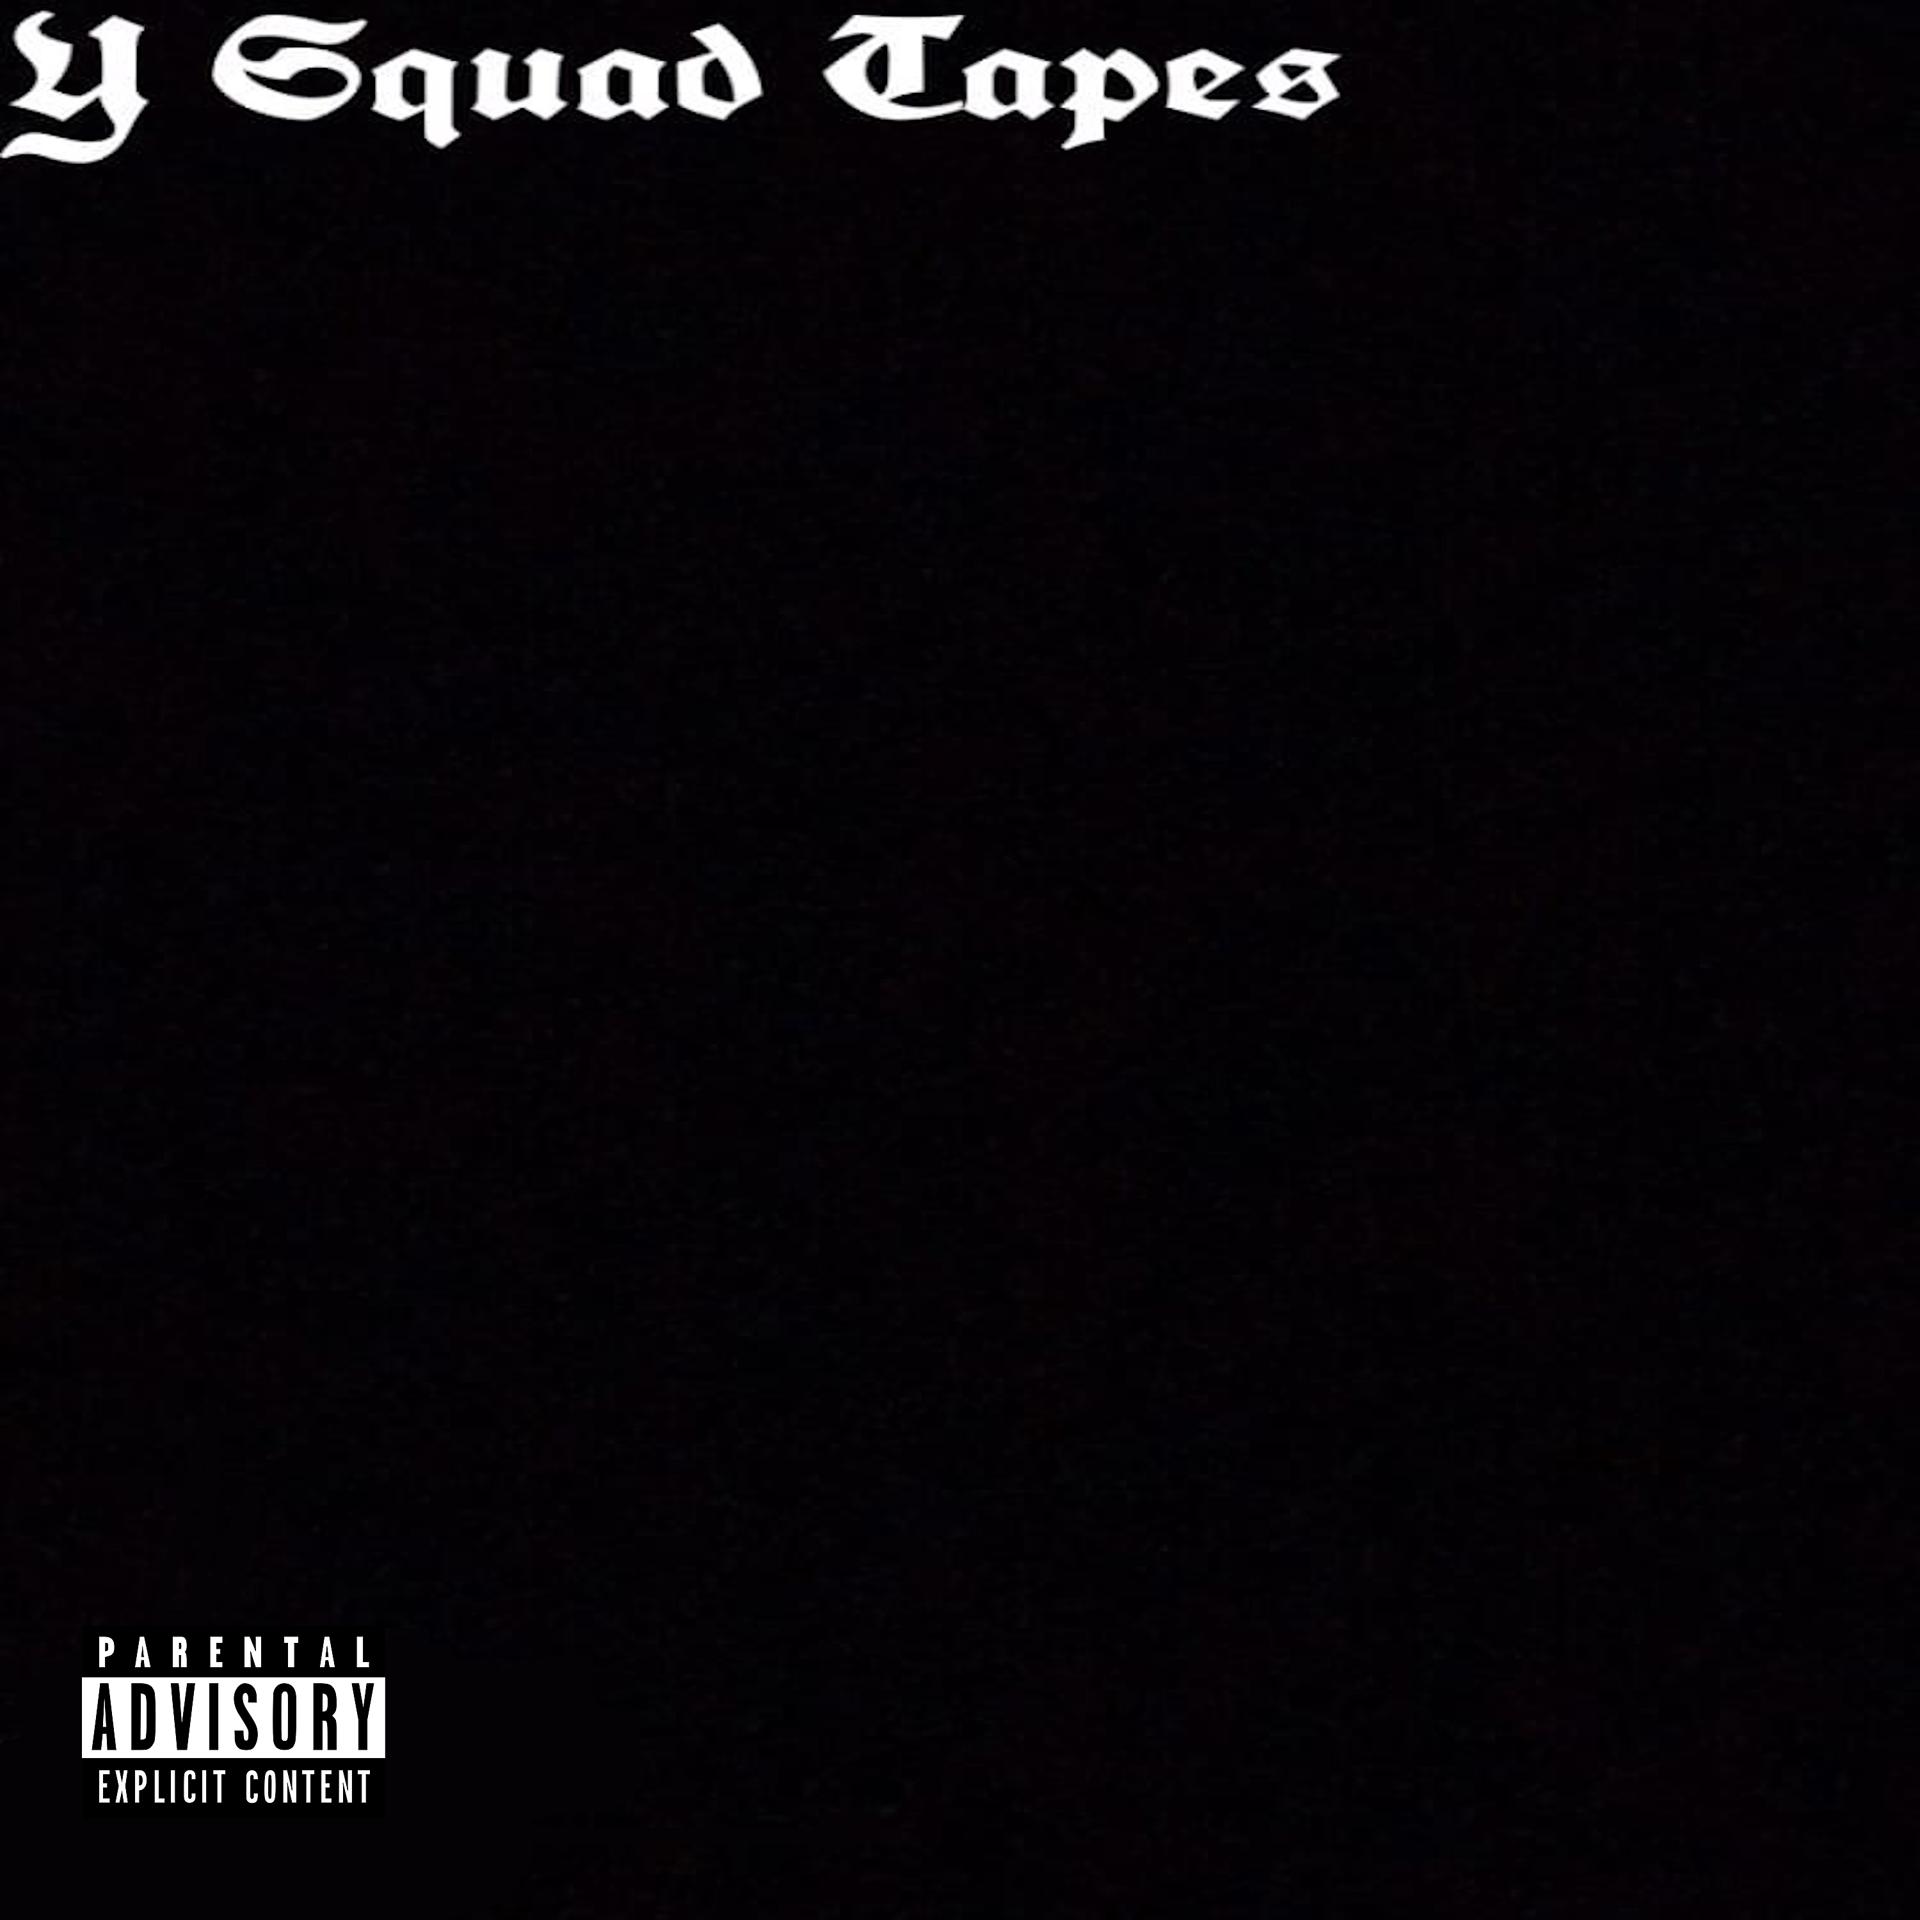 Постер альбома Y Squad Tapes